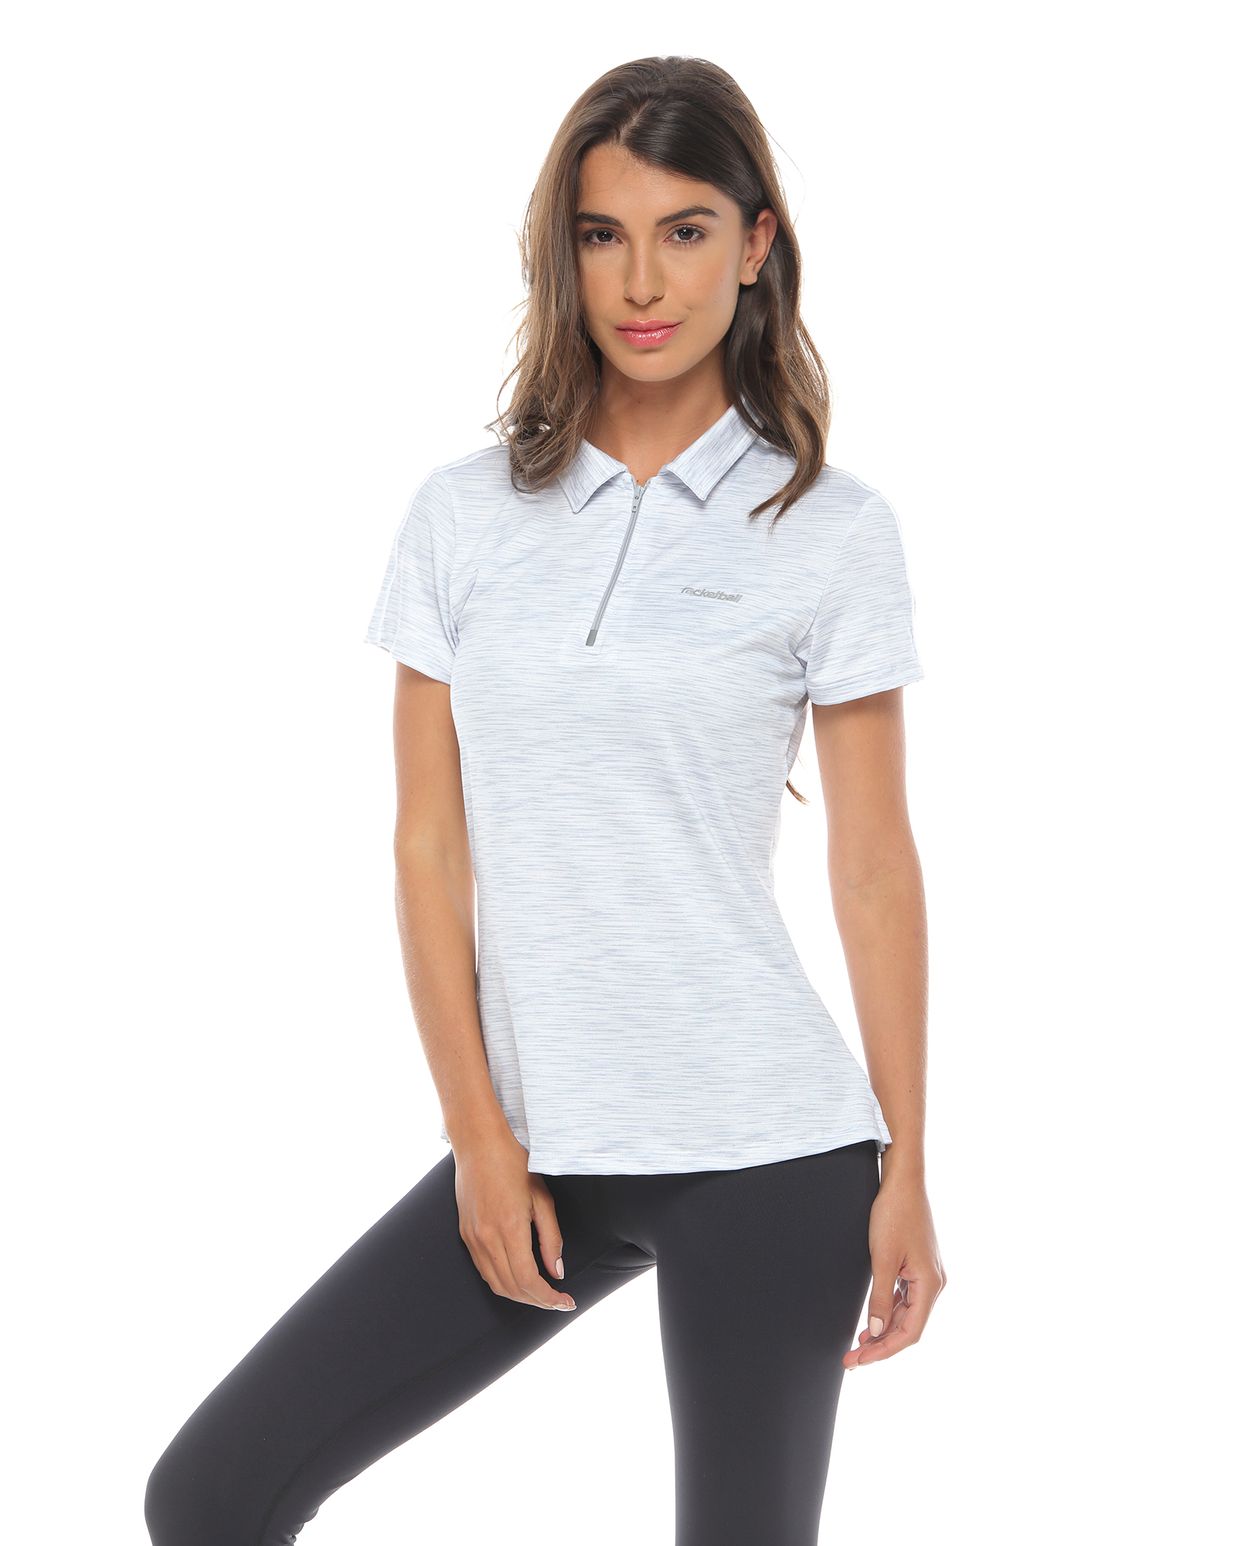 De trato fácil Multiplicación Alegre camiseta tipo polo de mujer, color blanco/jasped - racketball movil